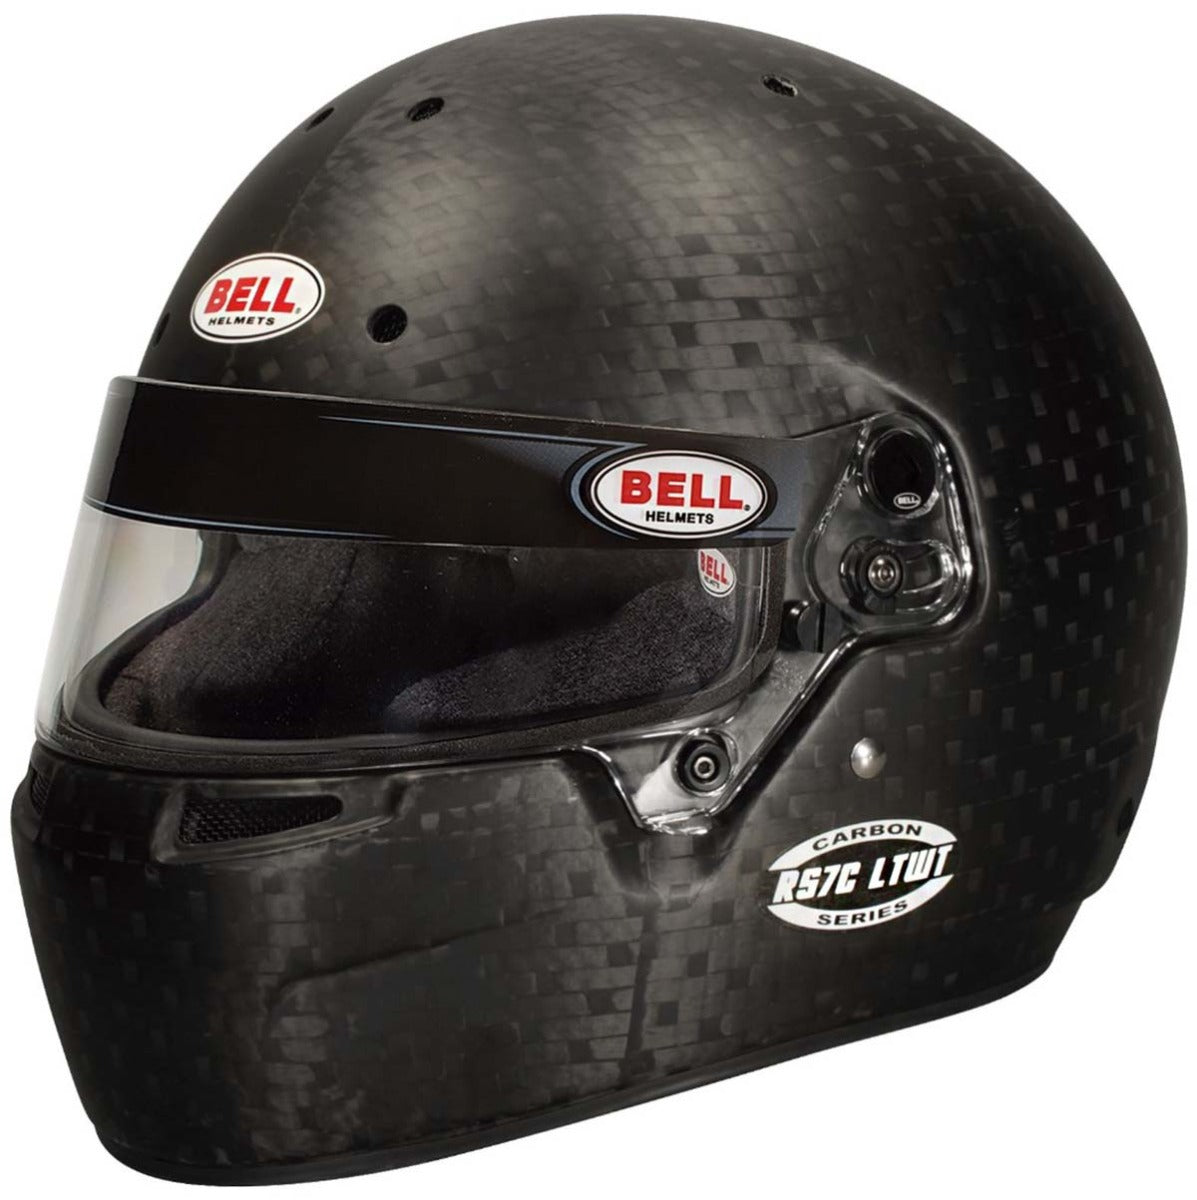 Bell RS7C LTWT Carbon Fiber Helmet SA2020 Front View Image